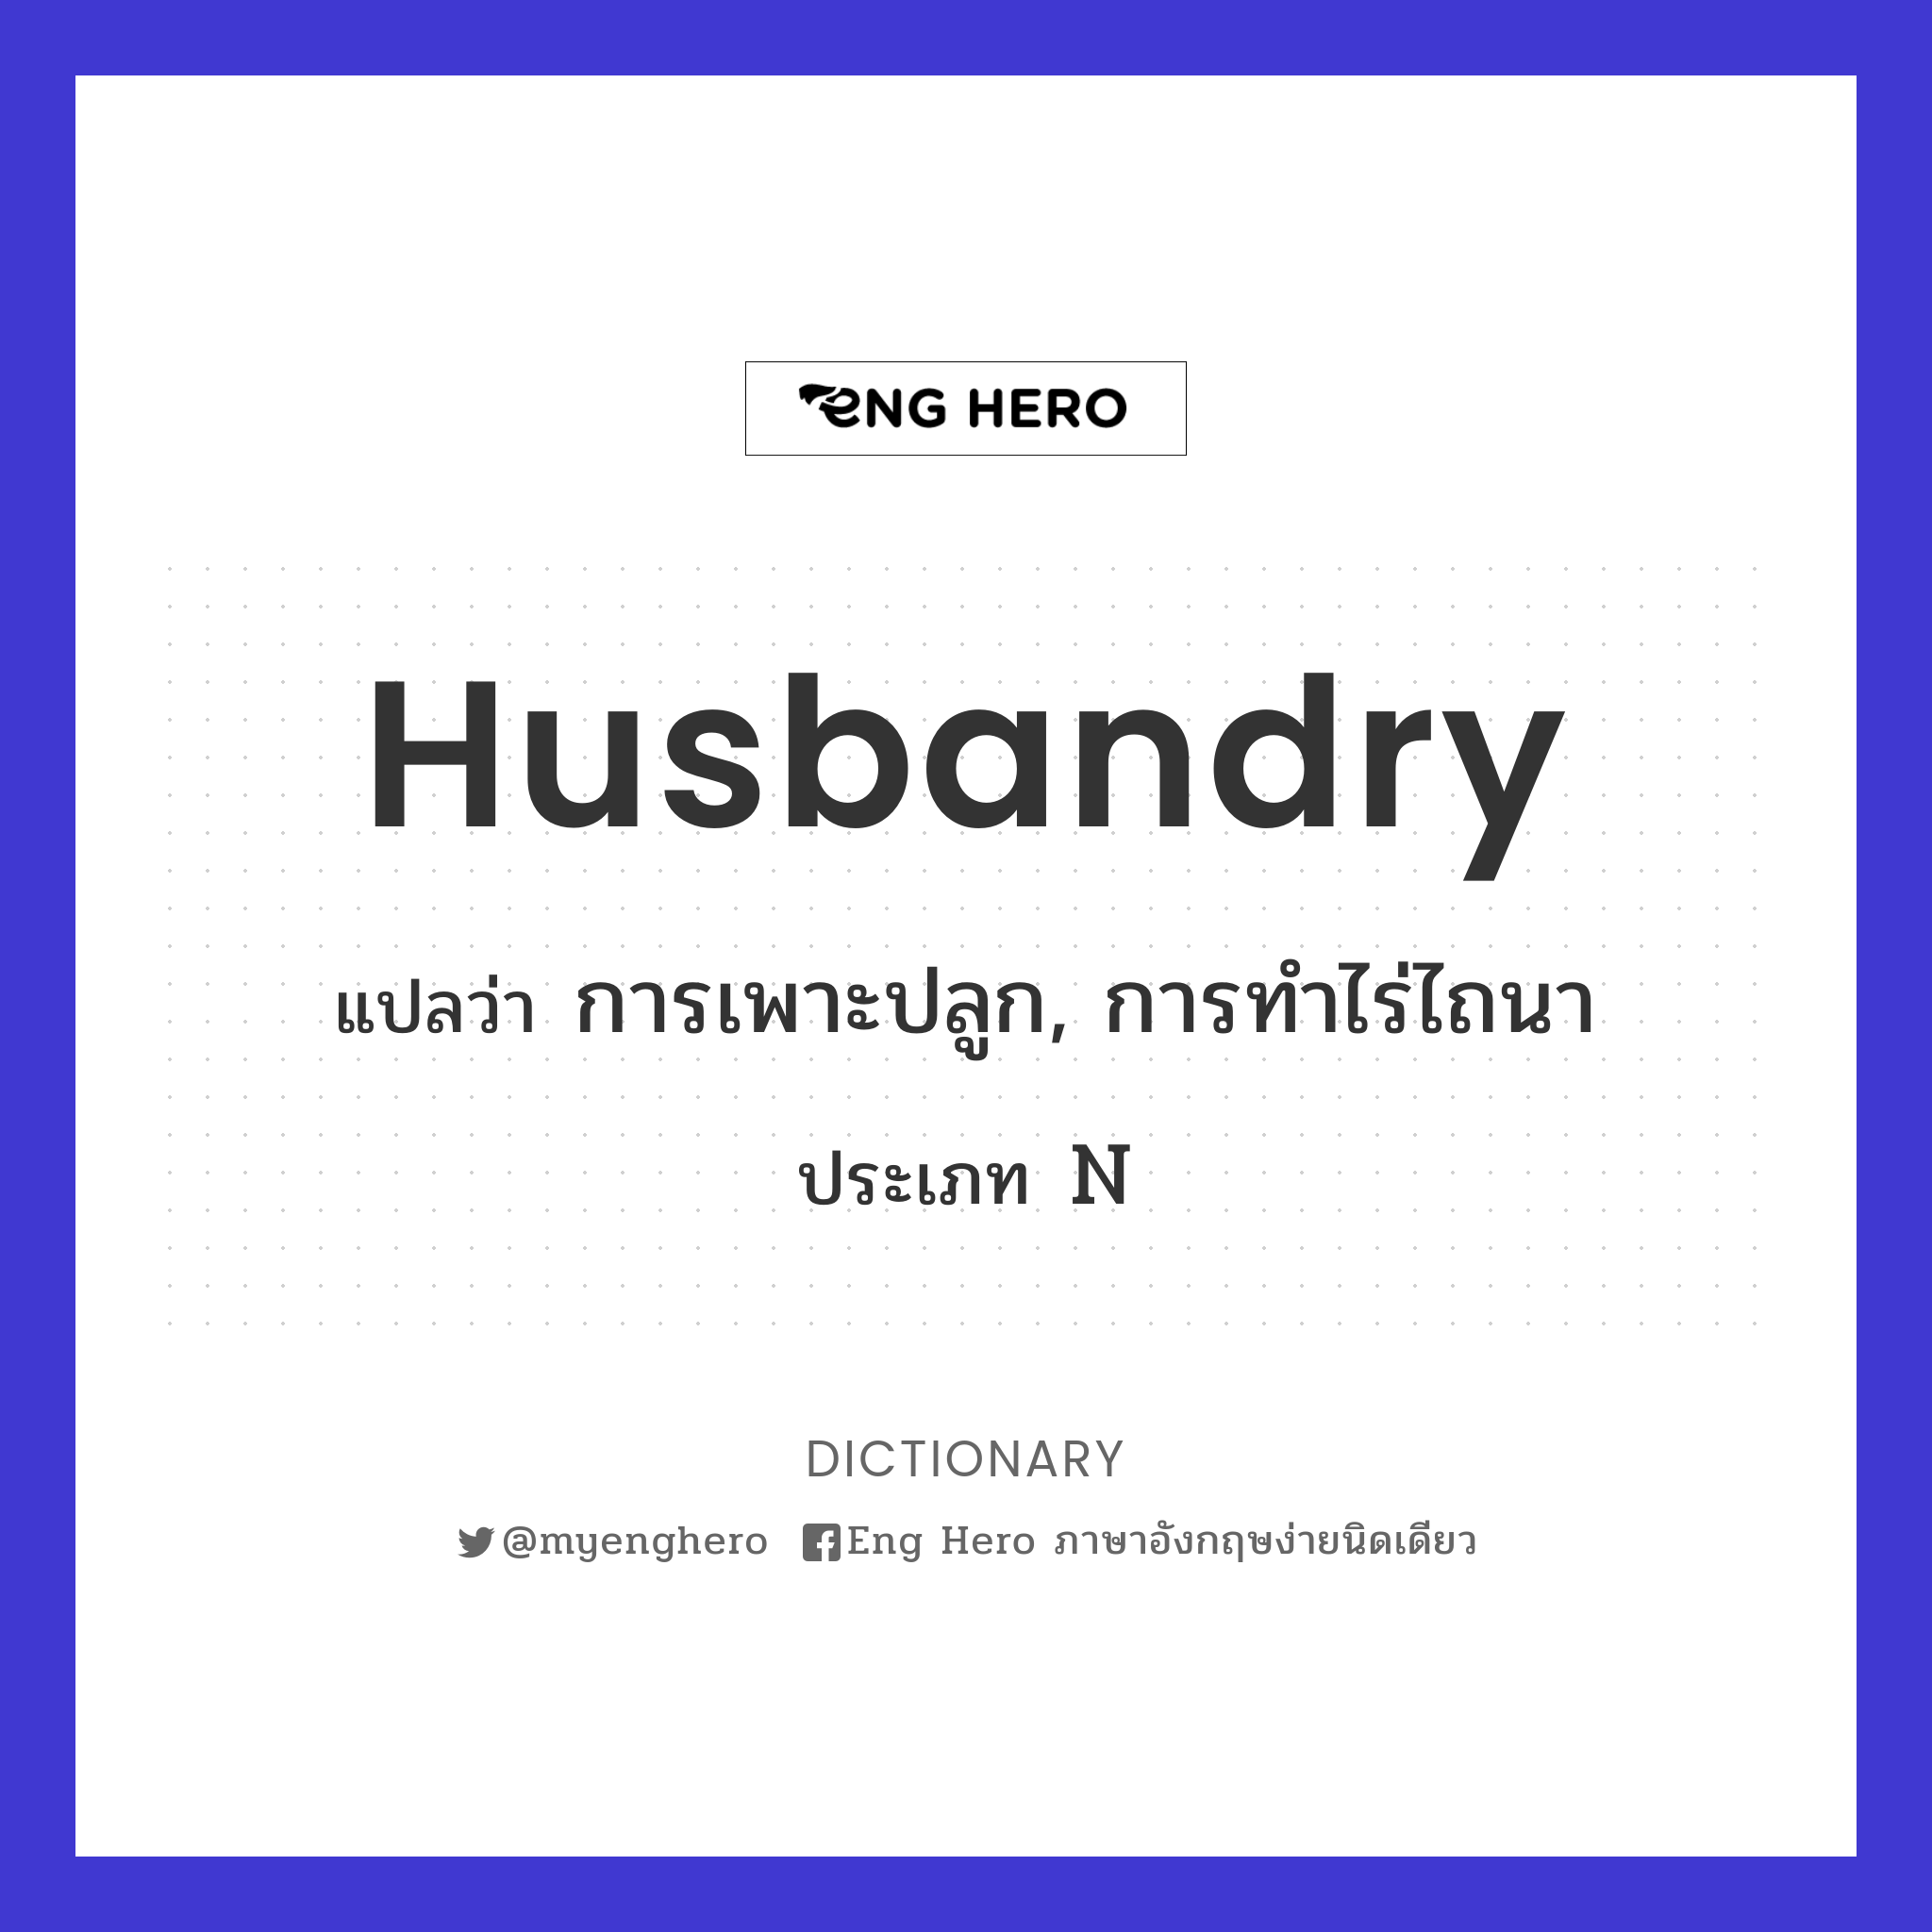 husbandry